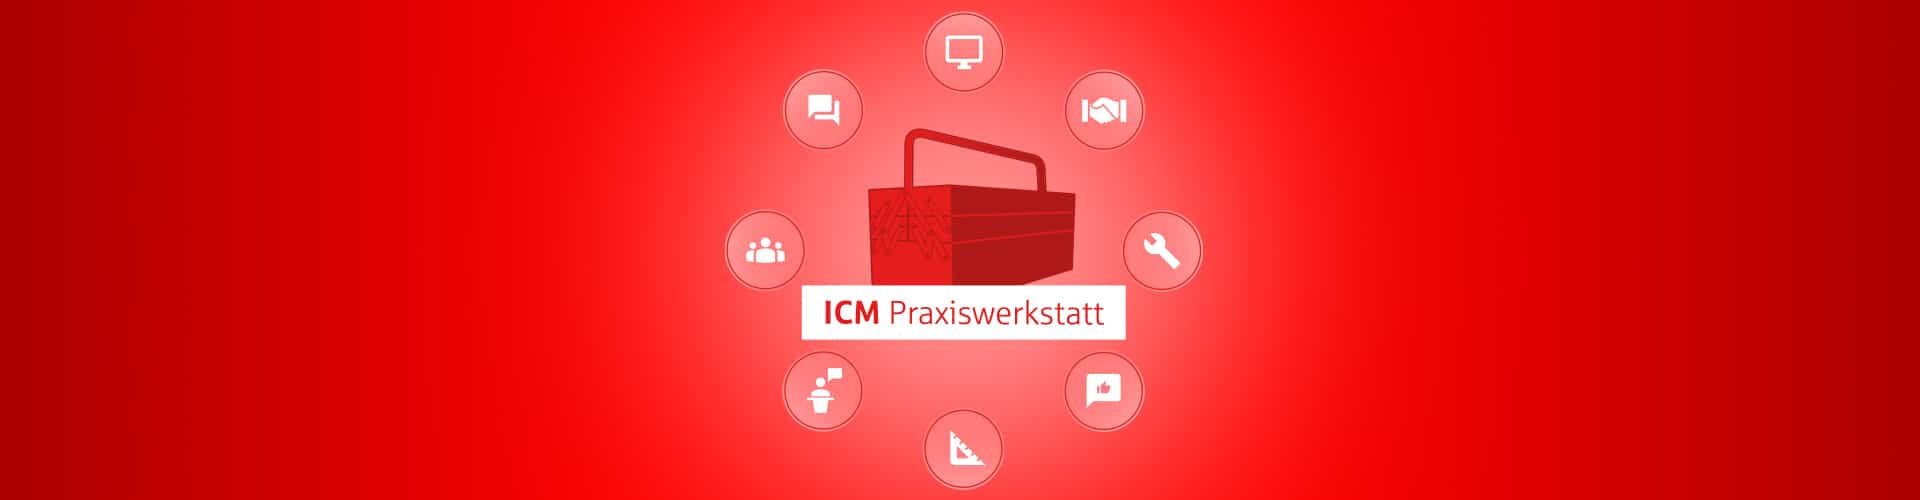 sc@web-ICM Praxiswerkstatt